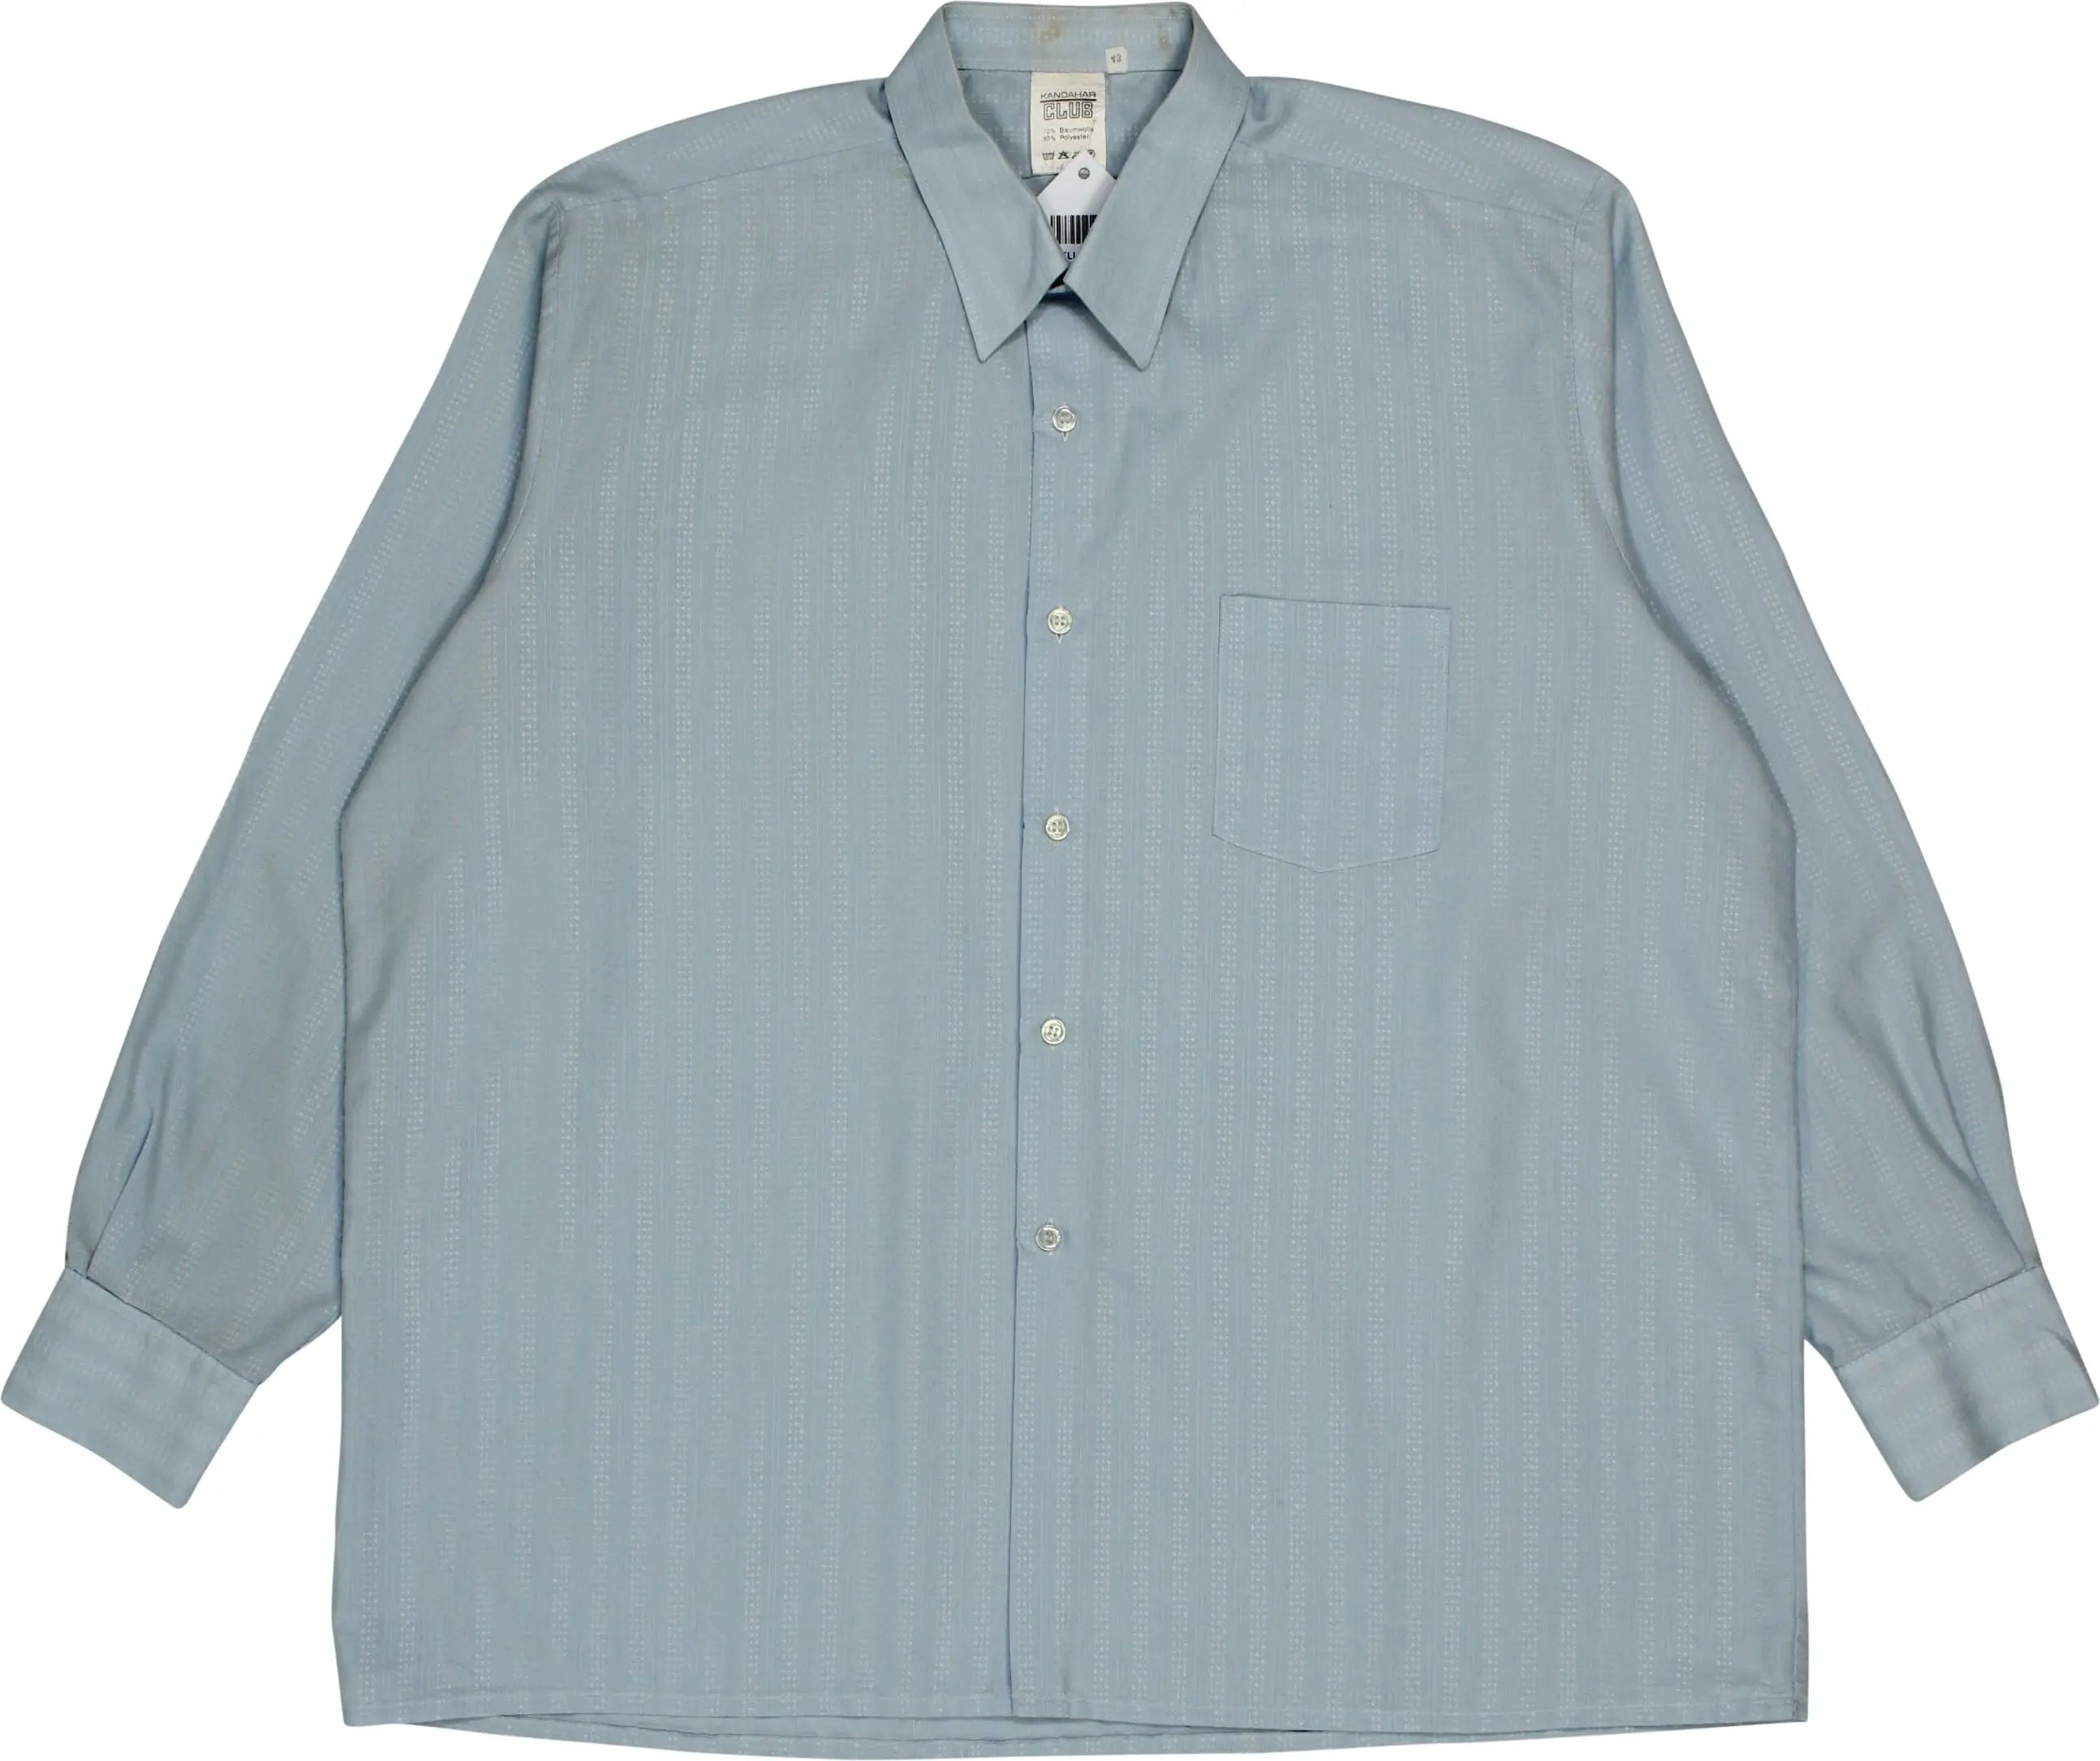 Kandahar Club - 70s Jacquard Weave Shirt- ThriftTale.com - Vintage and second handclothing